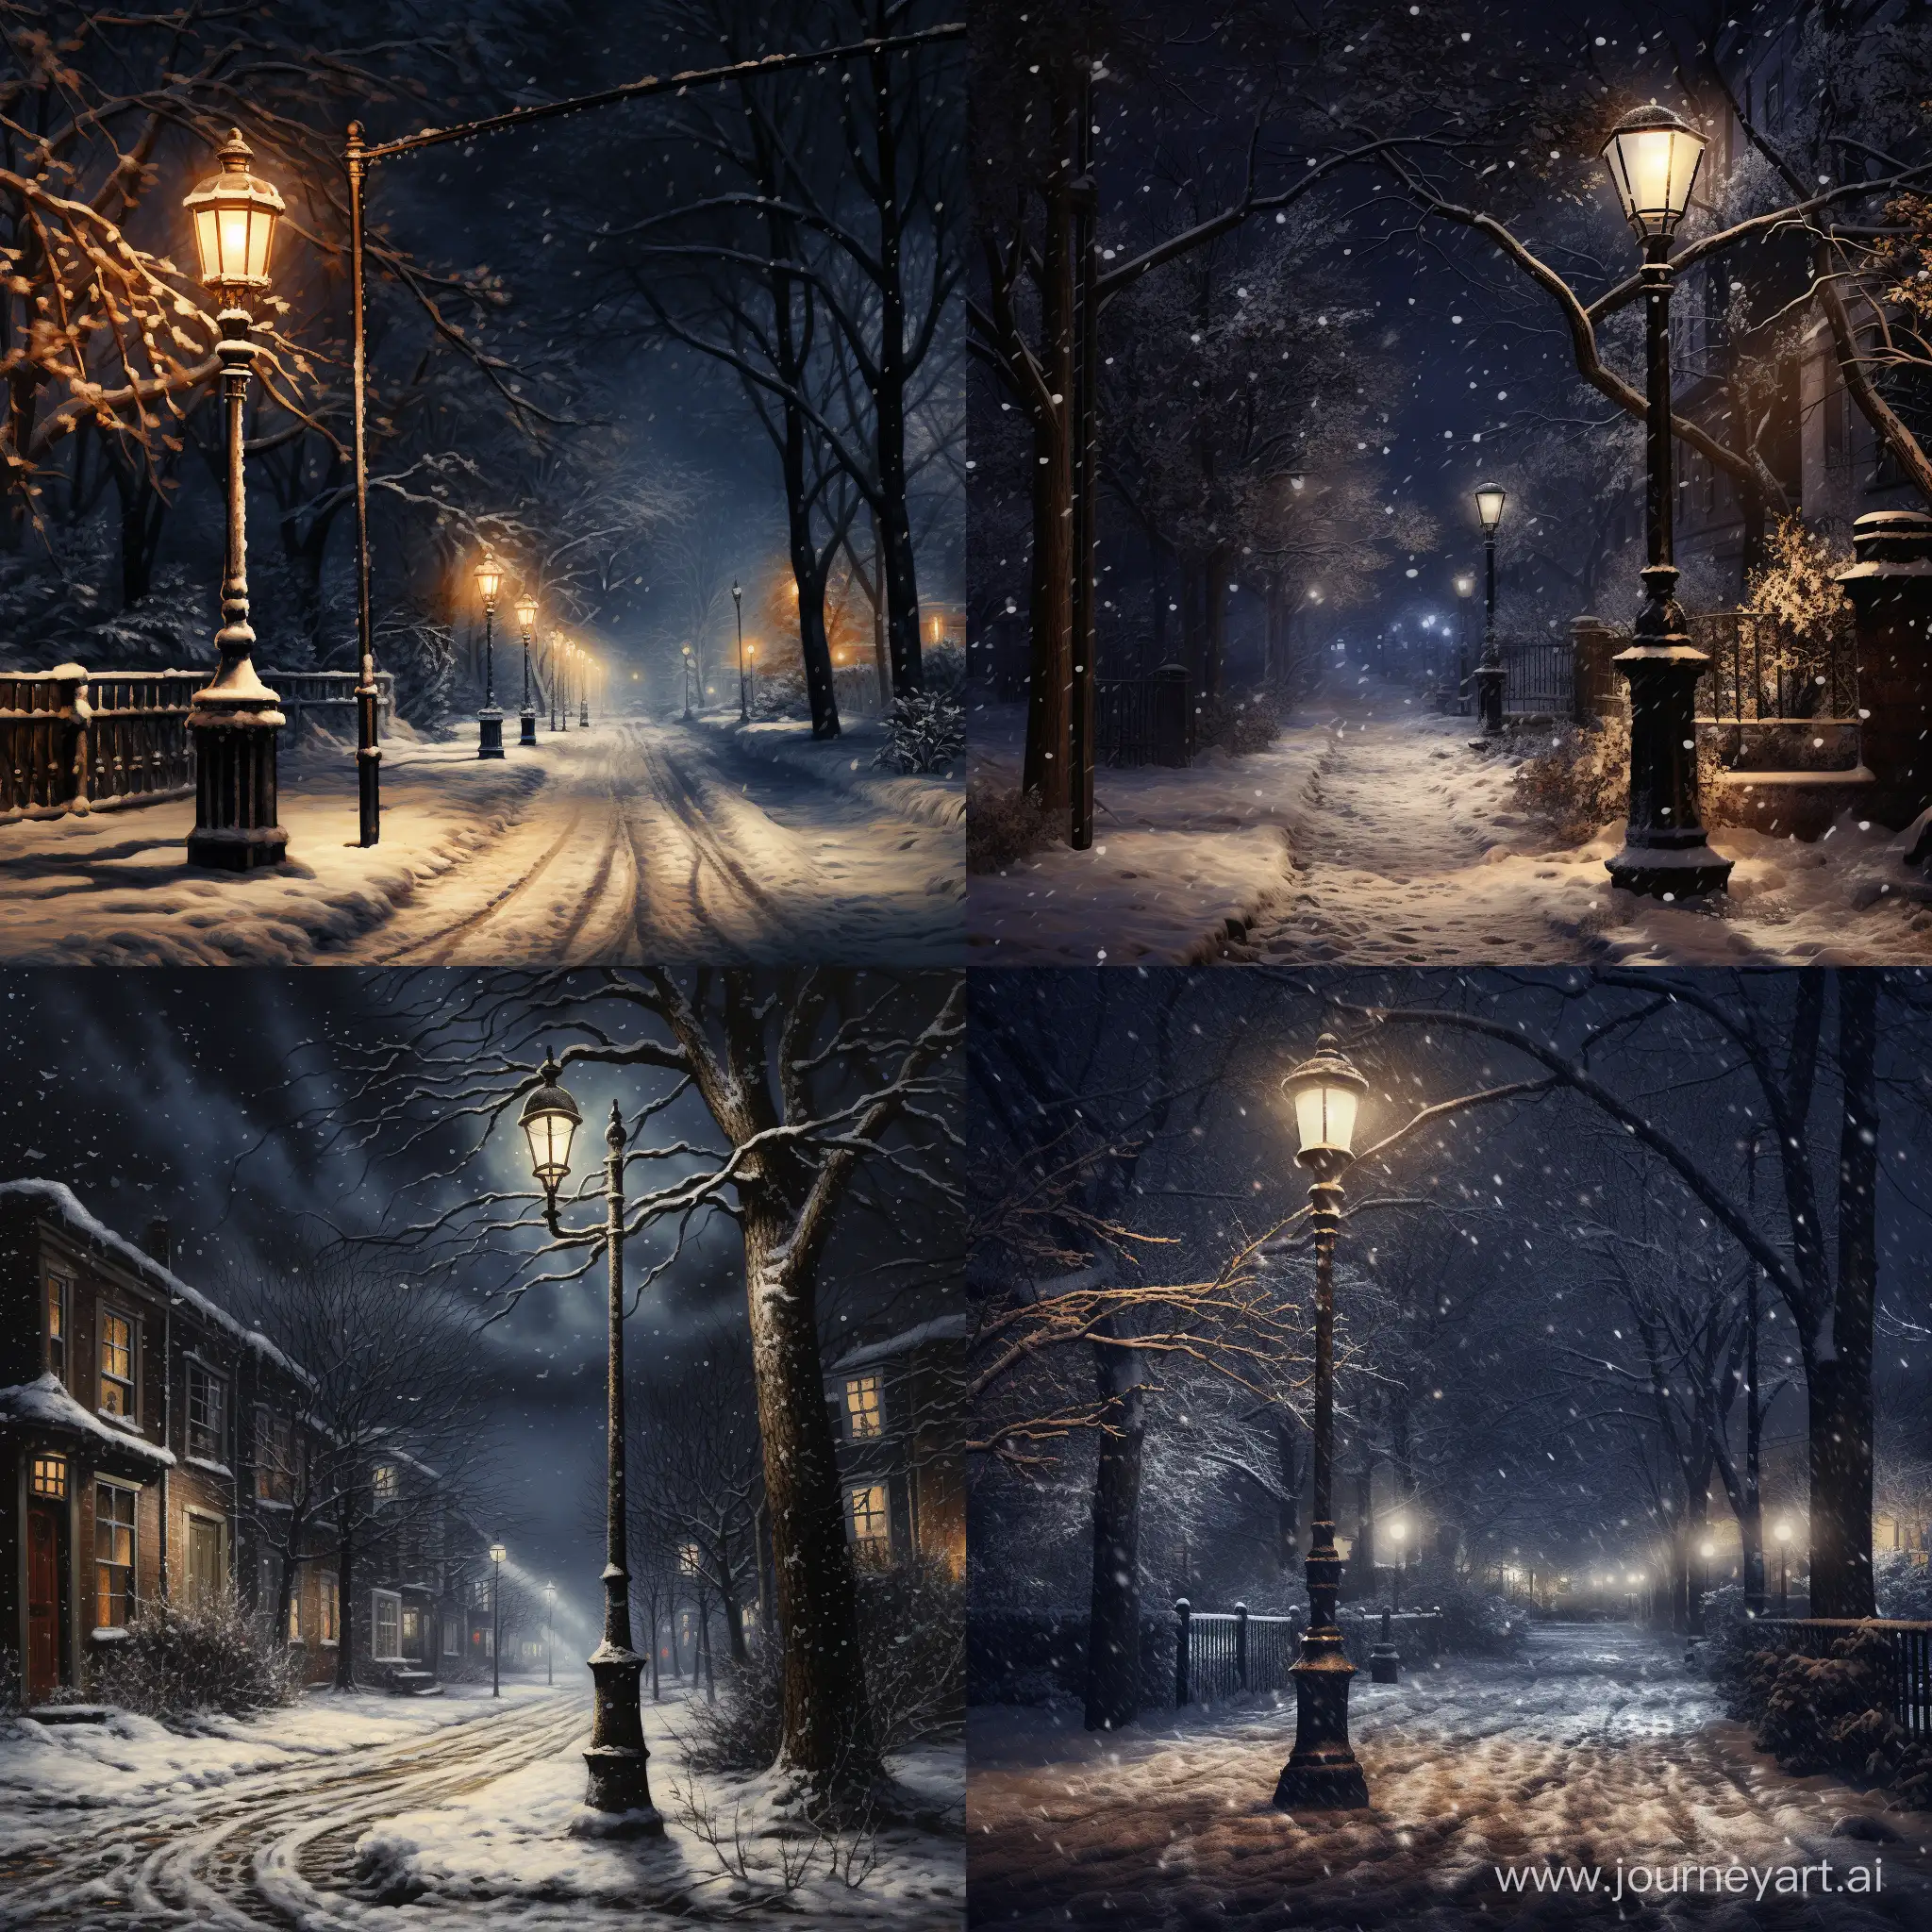 Enchanting-Winter-Night-Illuminated-Snowfall-under-a-Single-Street-Lamp